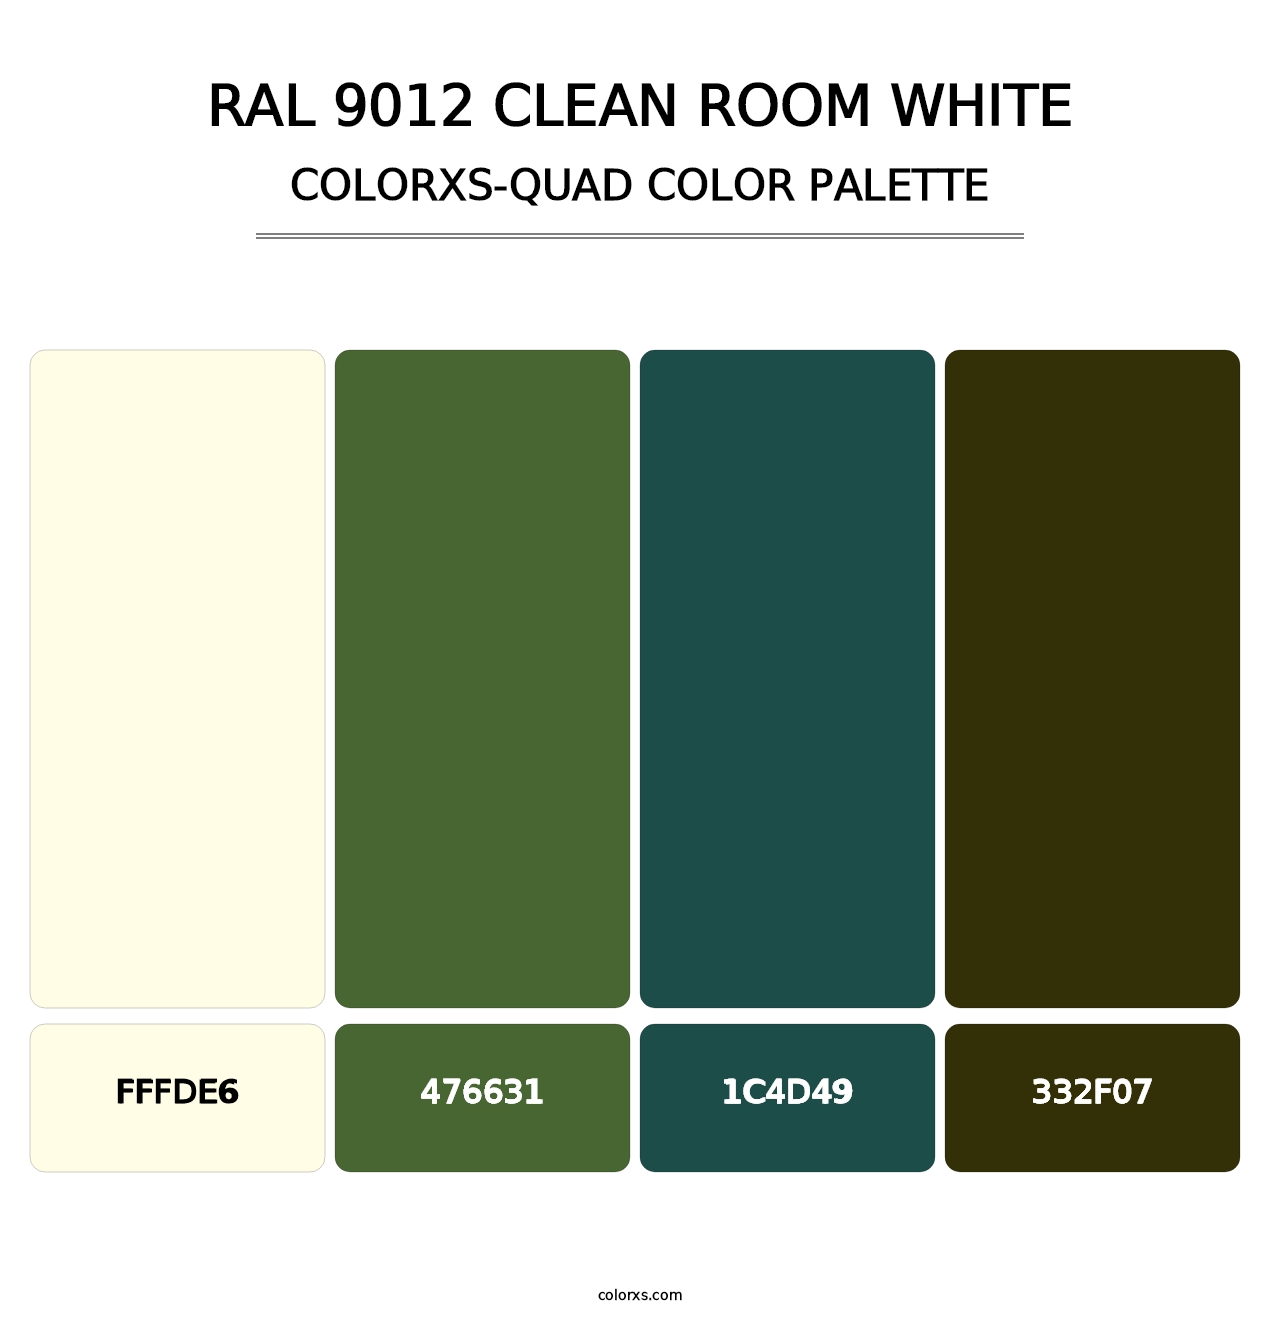 RAL 9012 Clean Room White - Colorxs Quad Palette